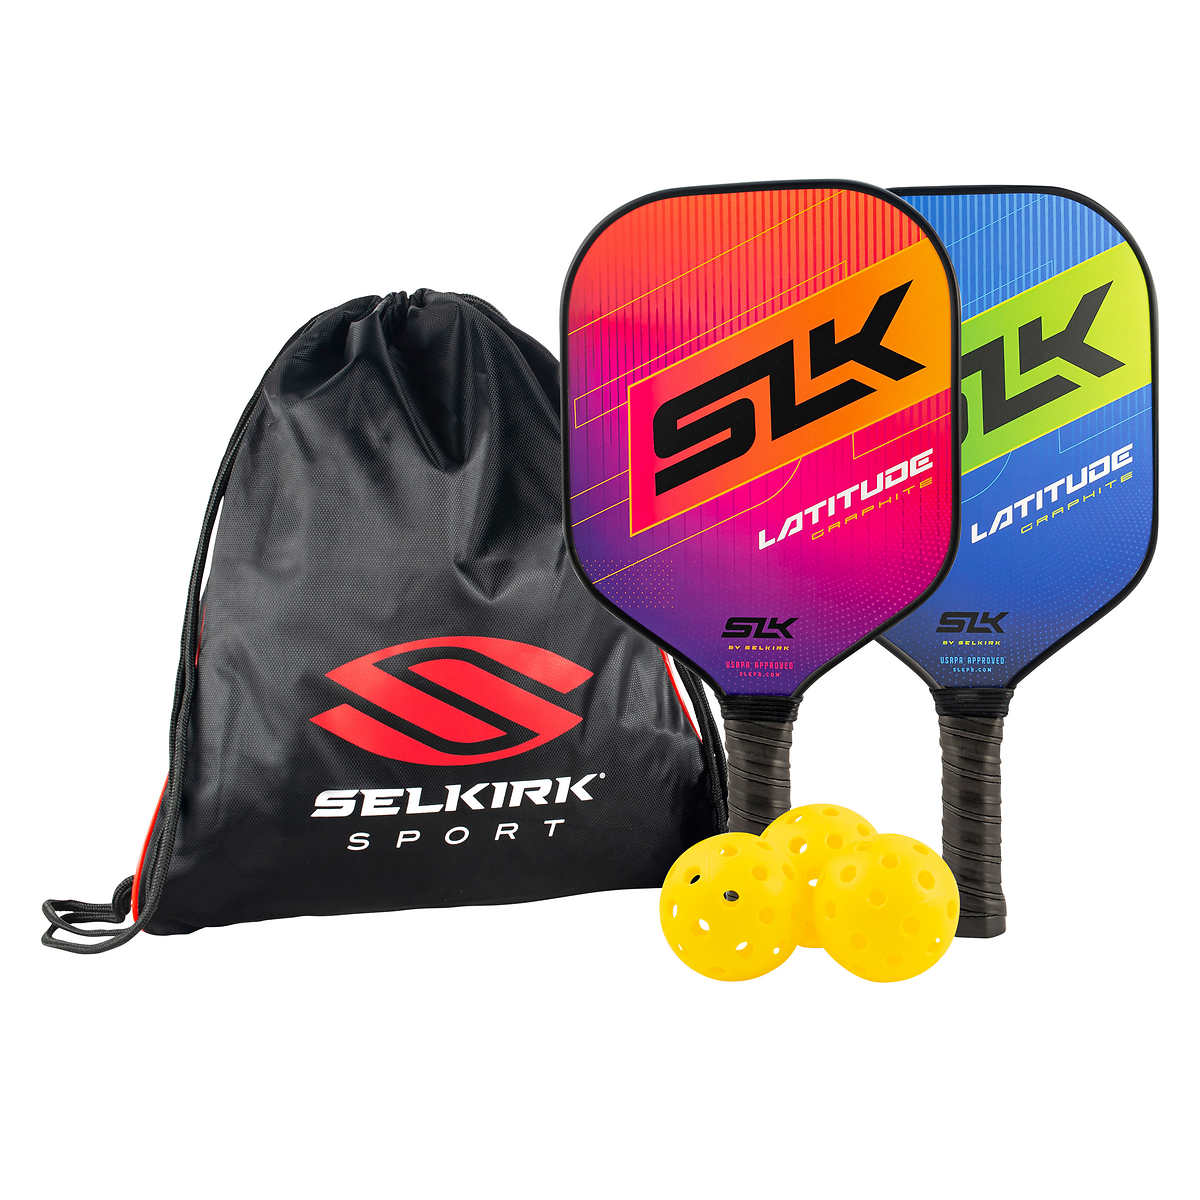 Selkirk SLK Latitude Pickleball Bundle- 2 Paddles, 3 Balls, and 1 Bag (Like New)